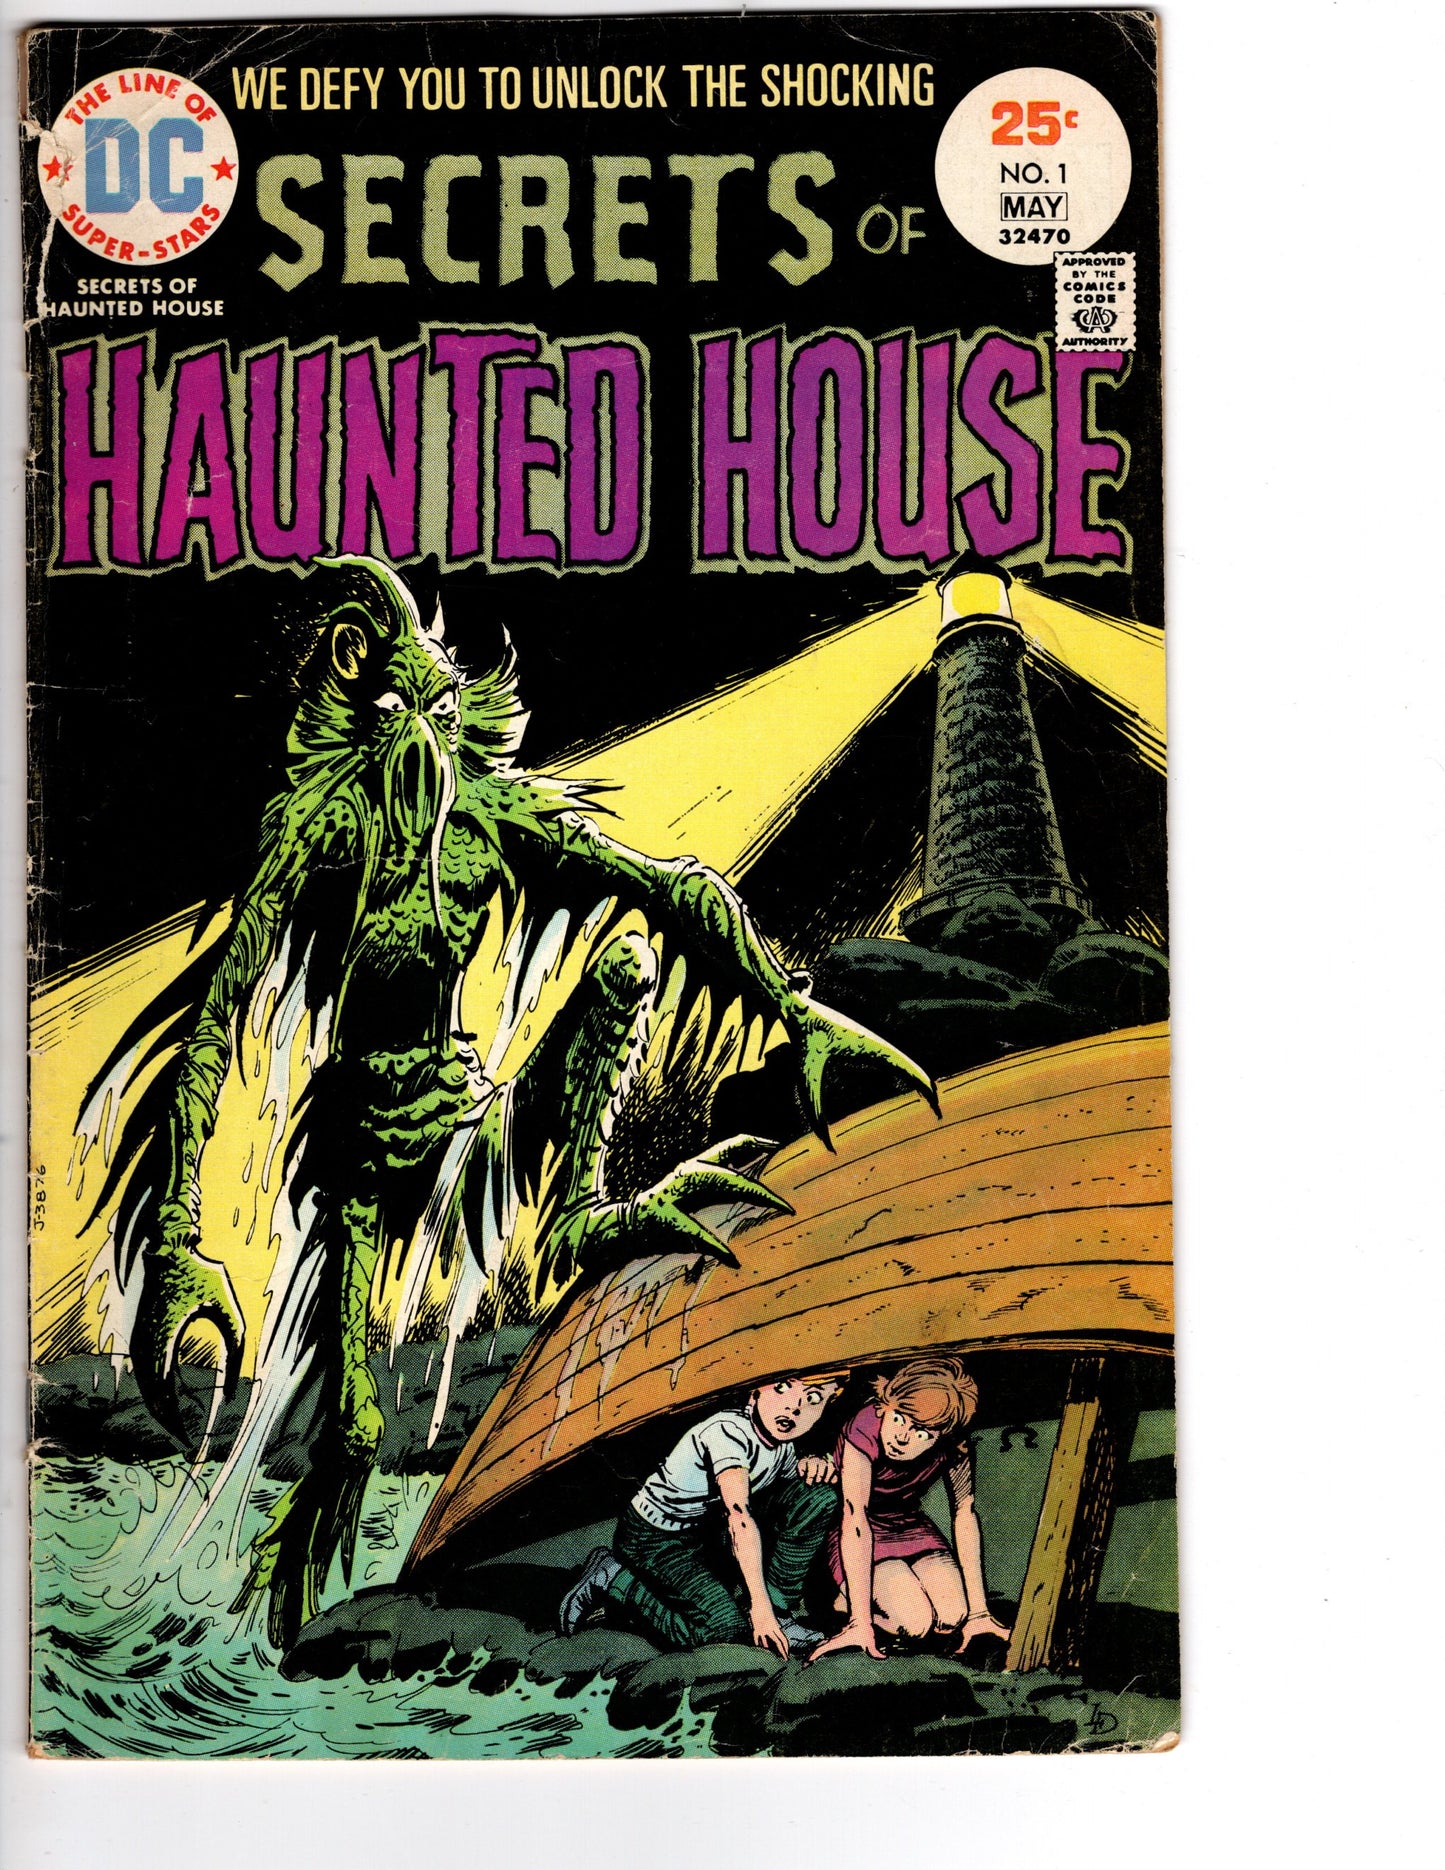 Secrets of Haunted House #1